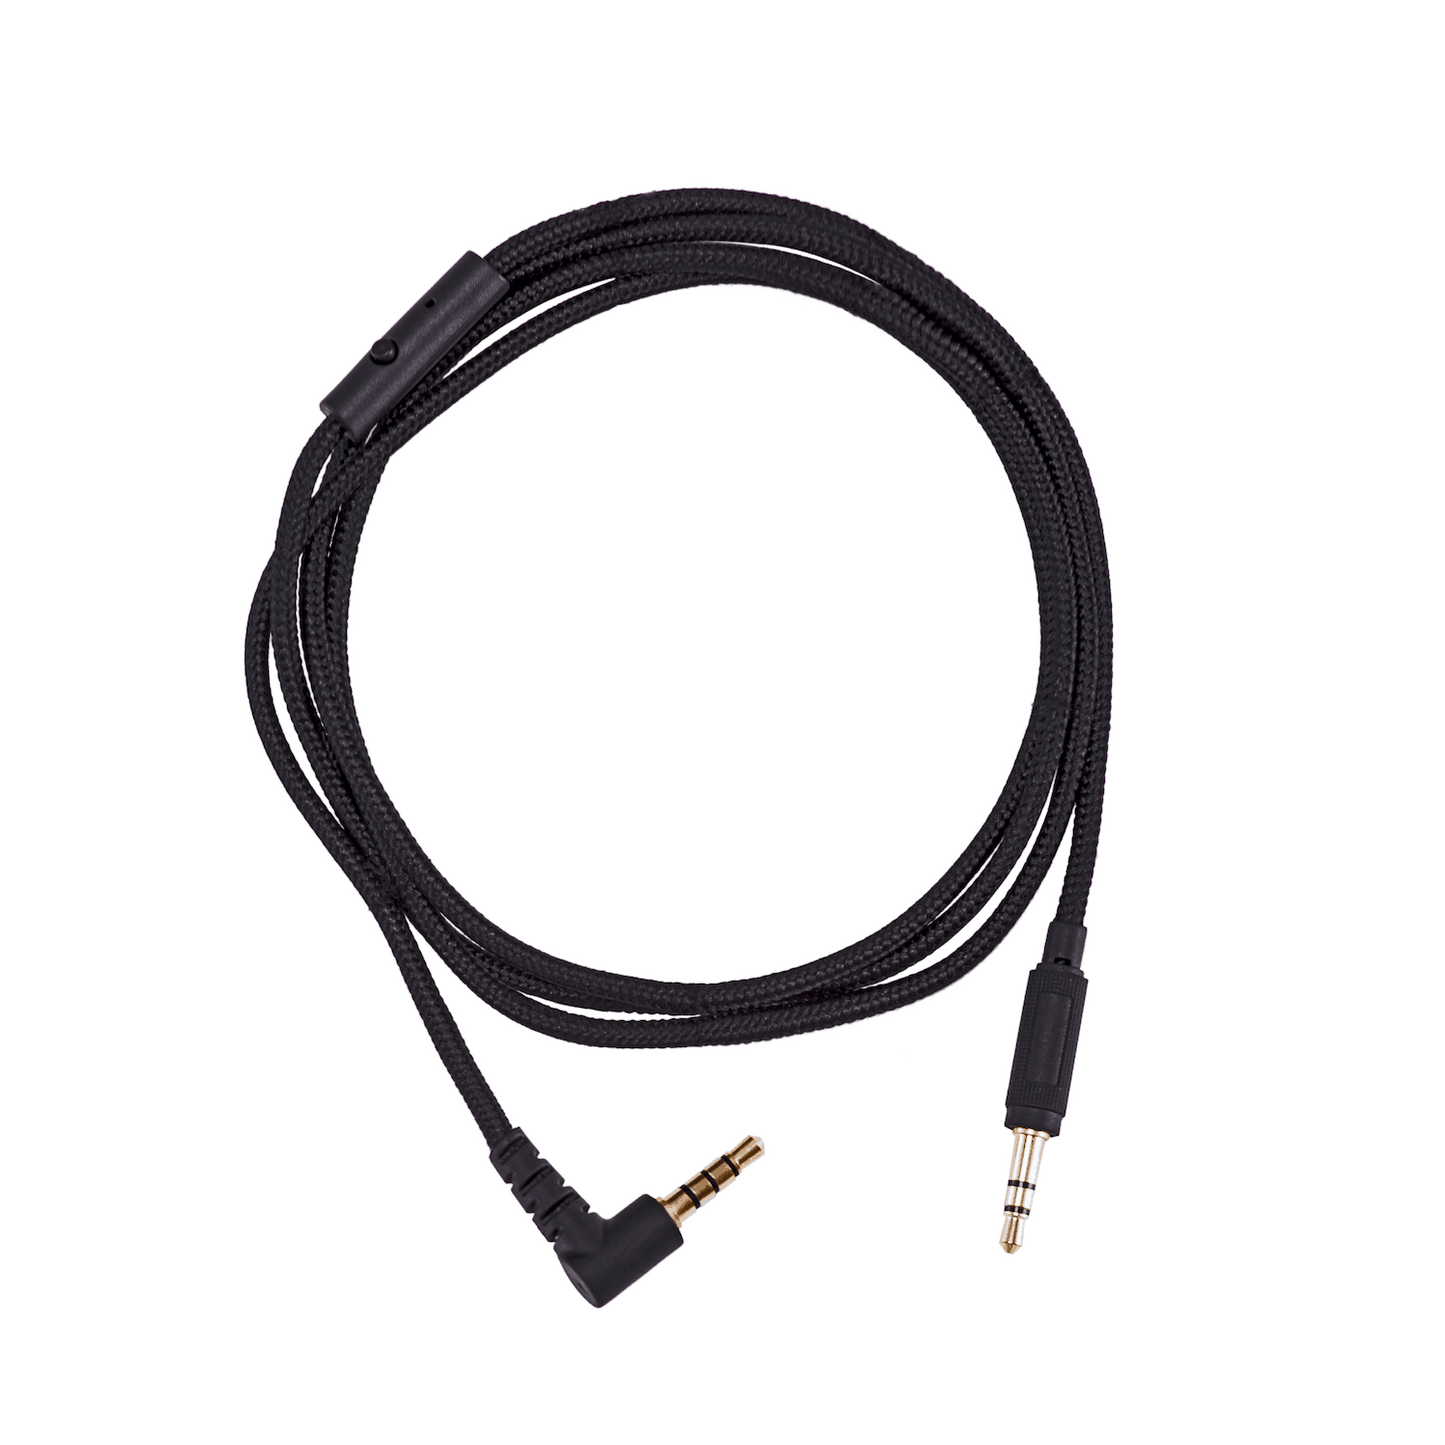 MIIEGO Audio cable